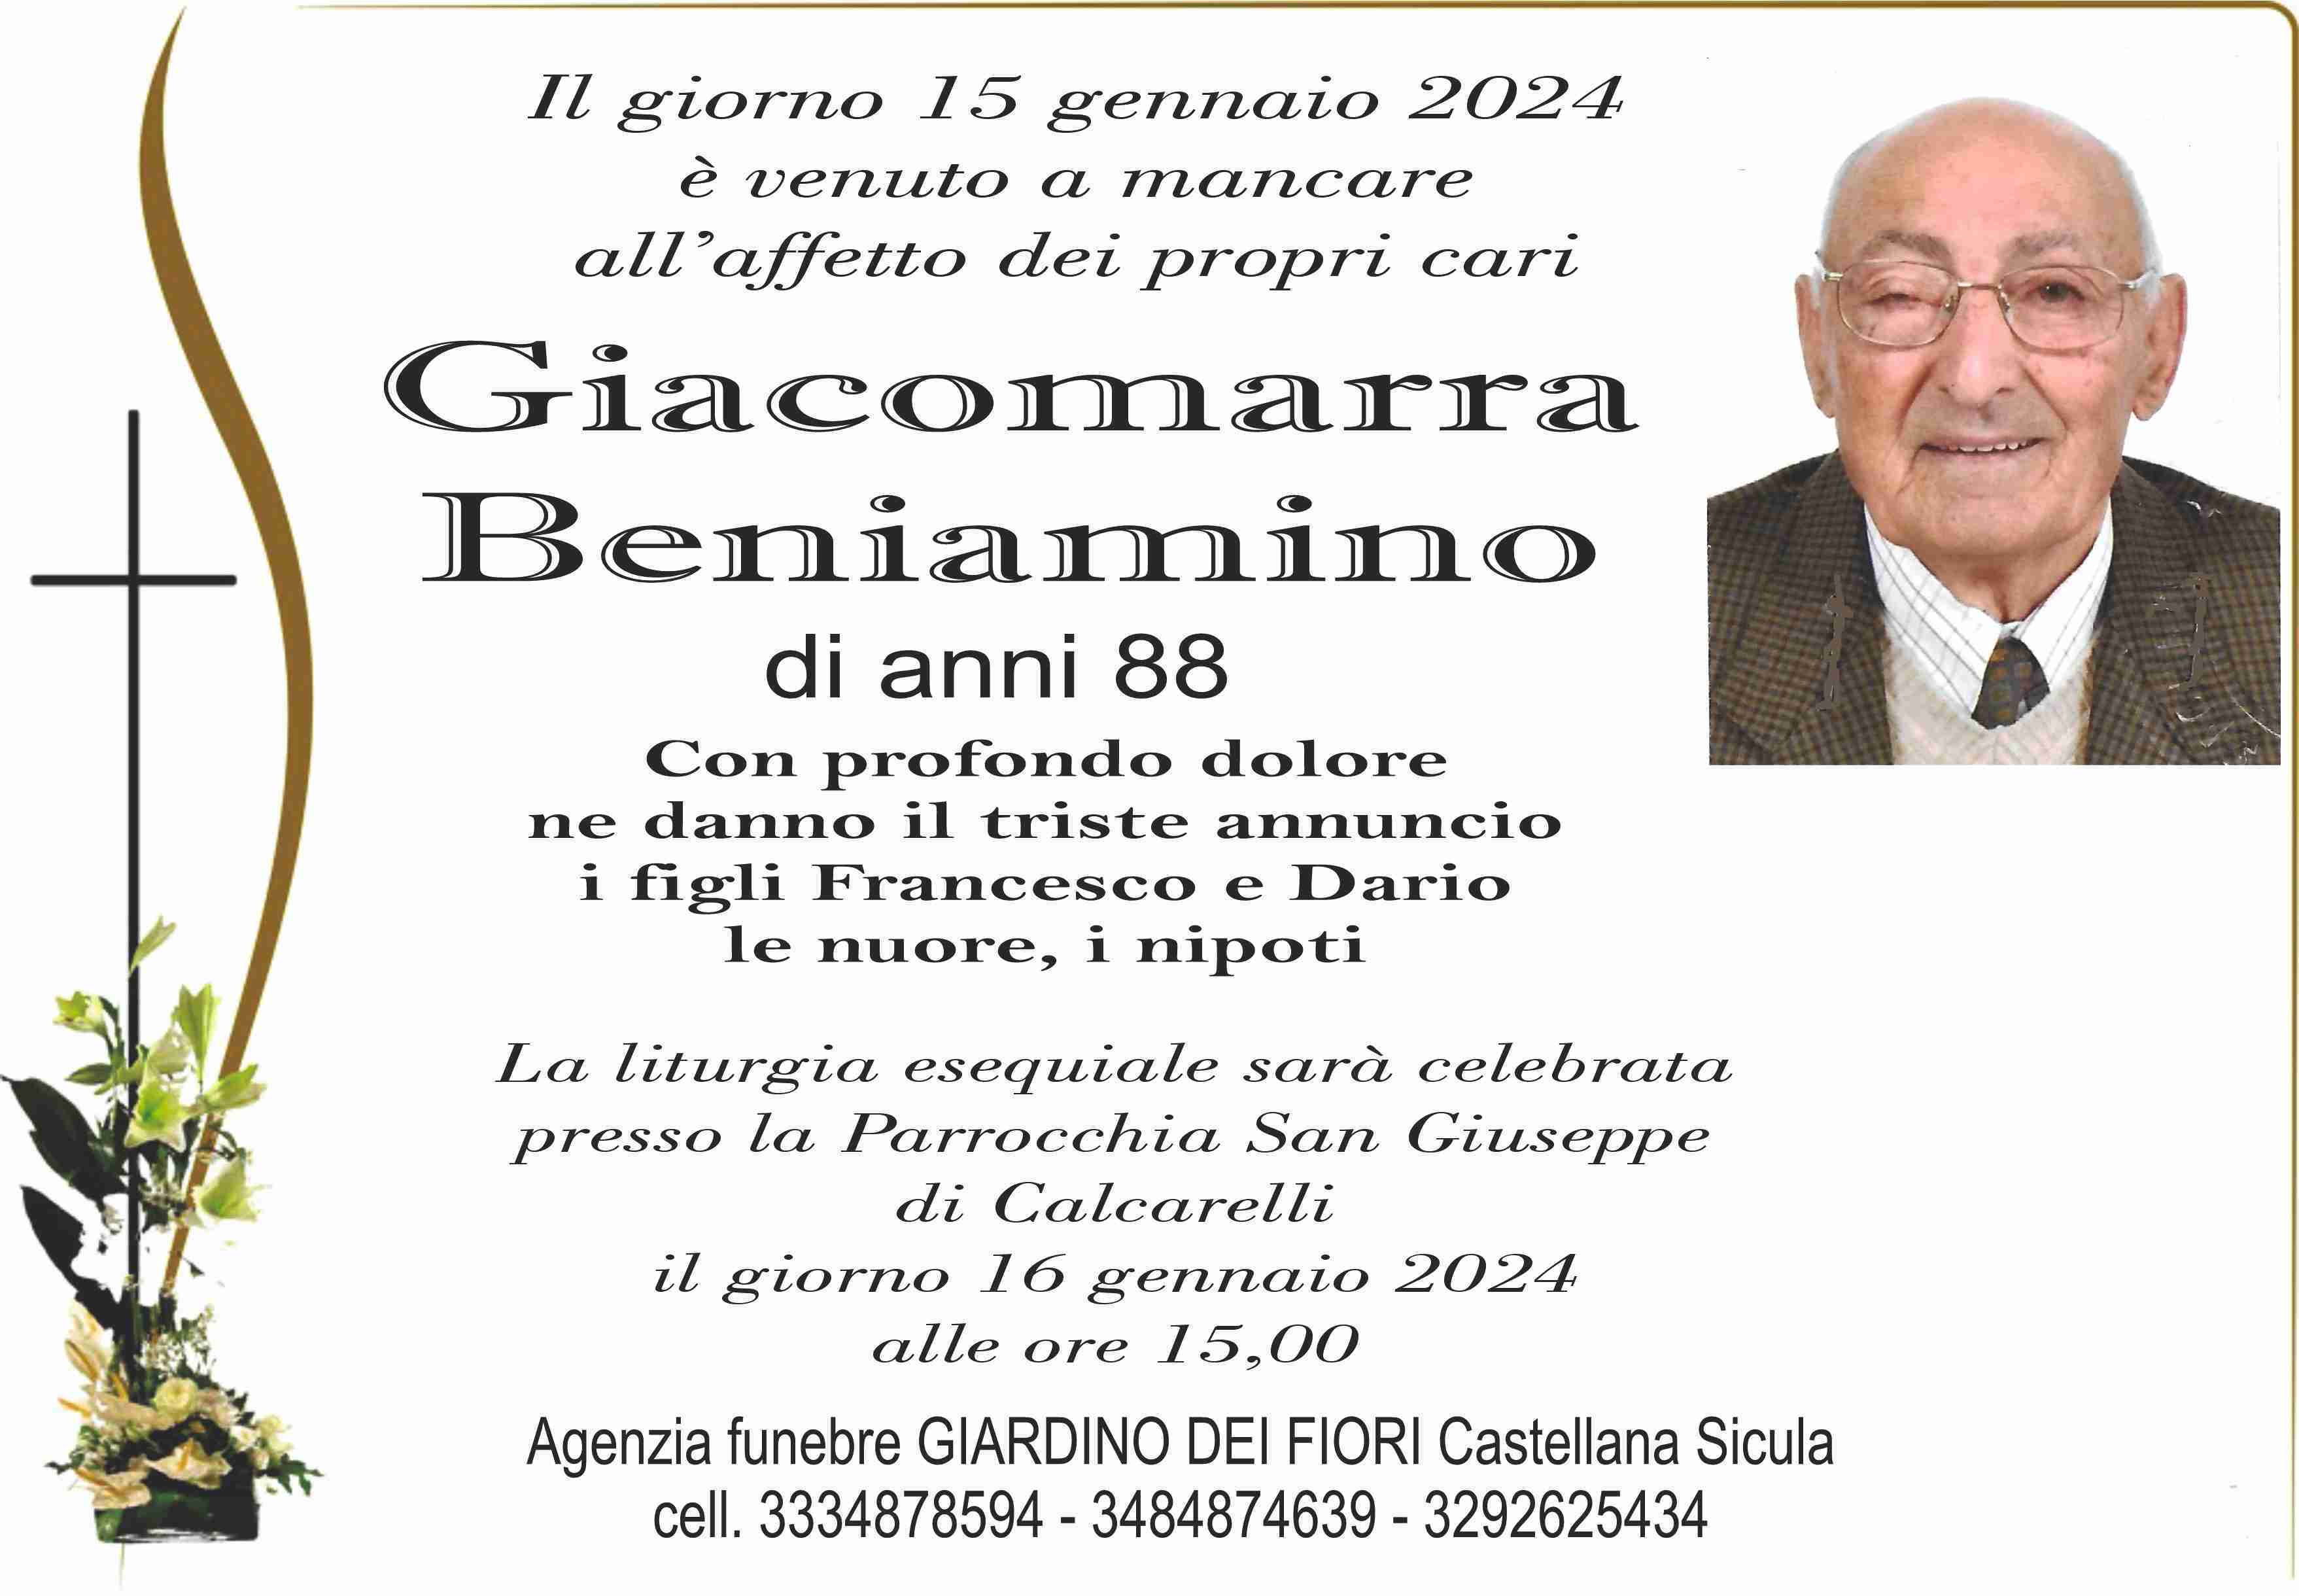 Beniamino Giacomarra